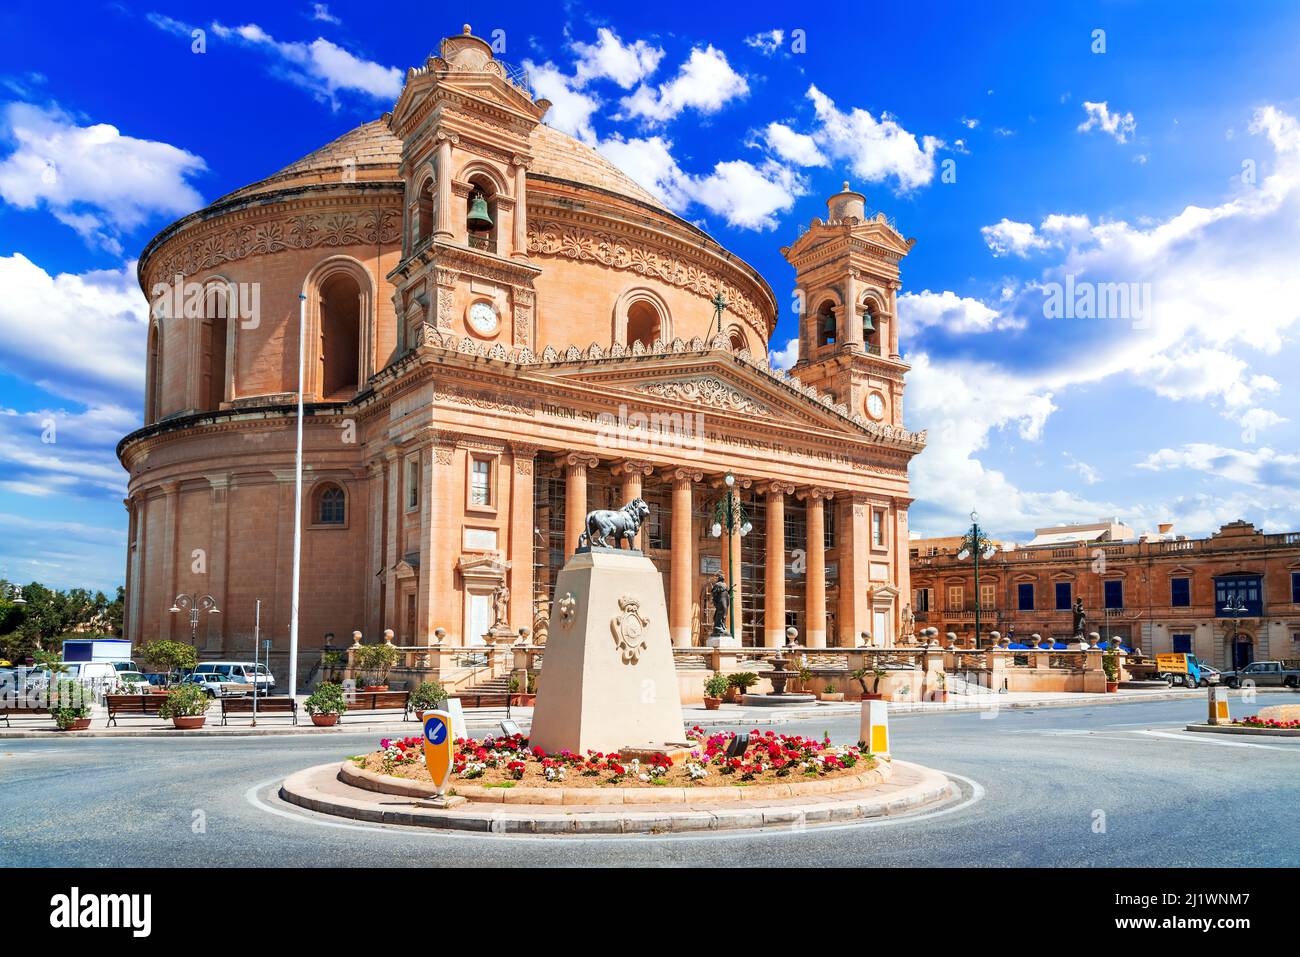 Mosta, Malta. Church Santa Marija Assunta or Rotunda Mosta, neoclassical architecture based on Pantheon of Rome. Stock Photo